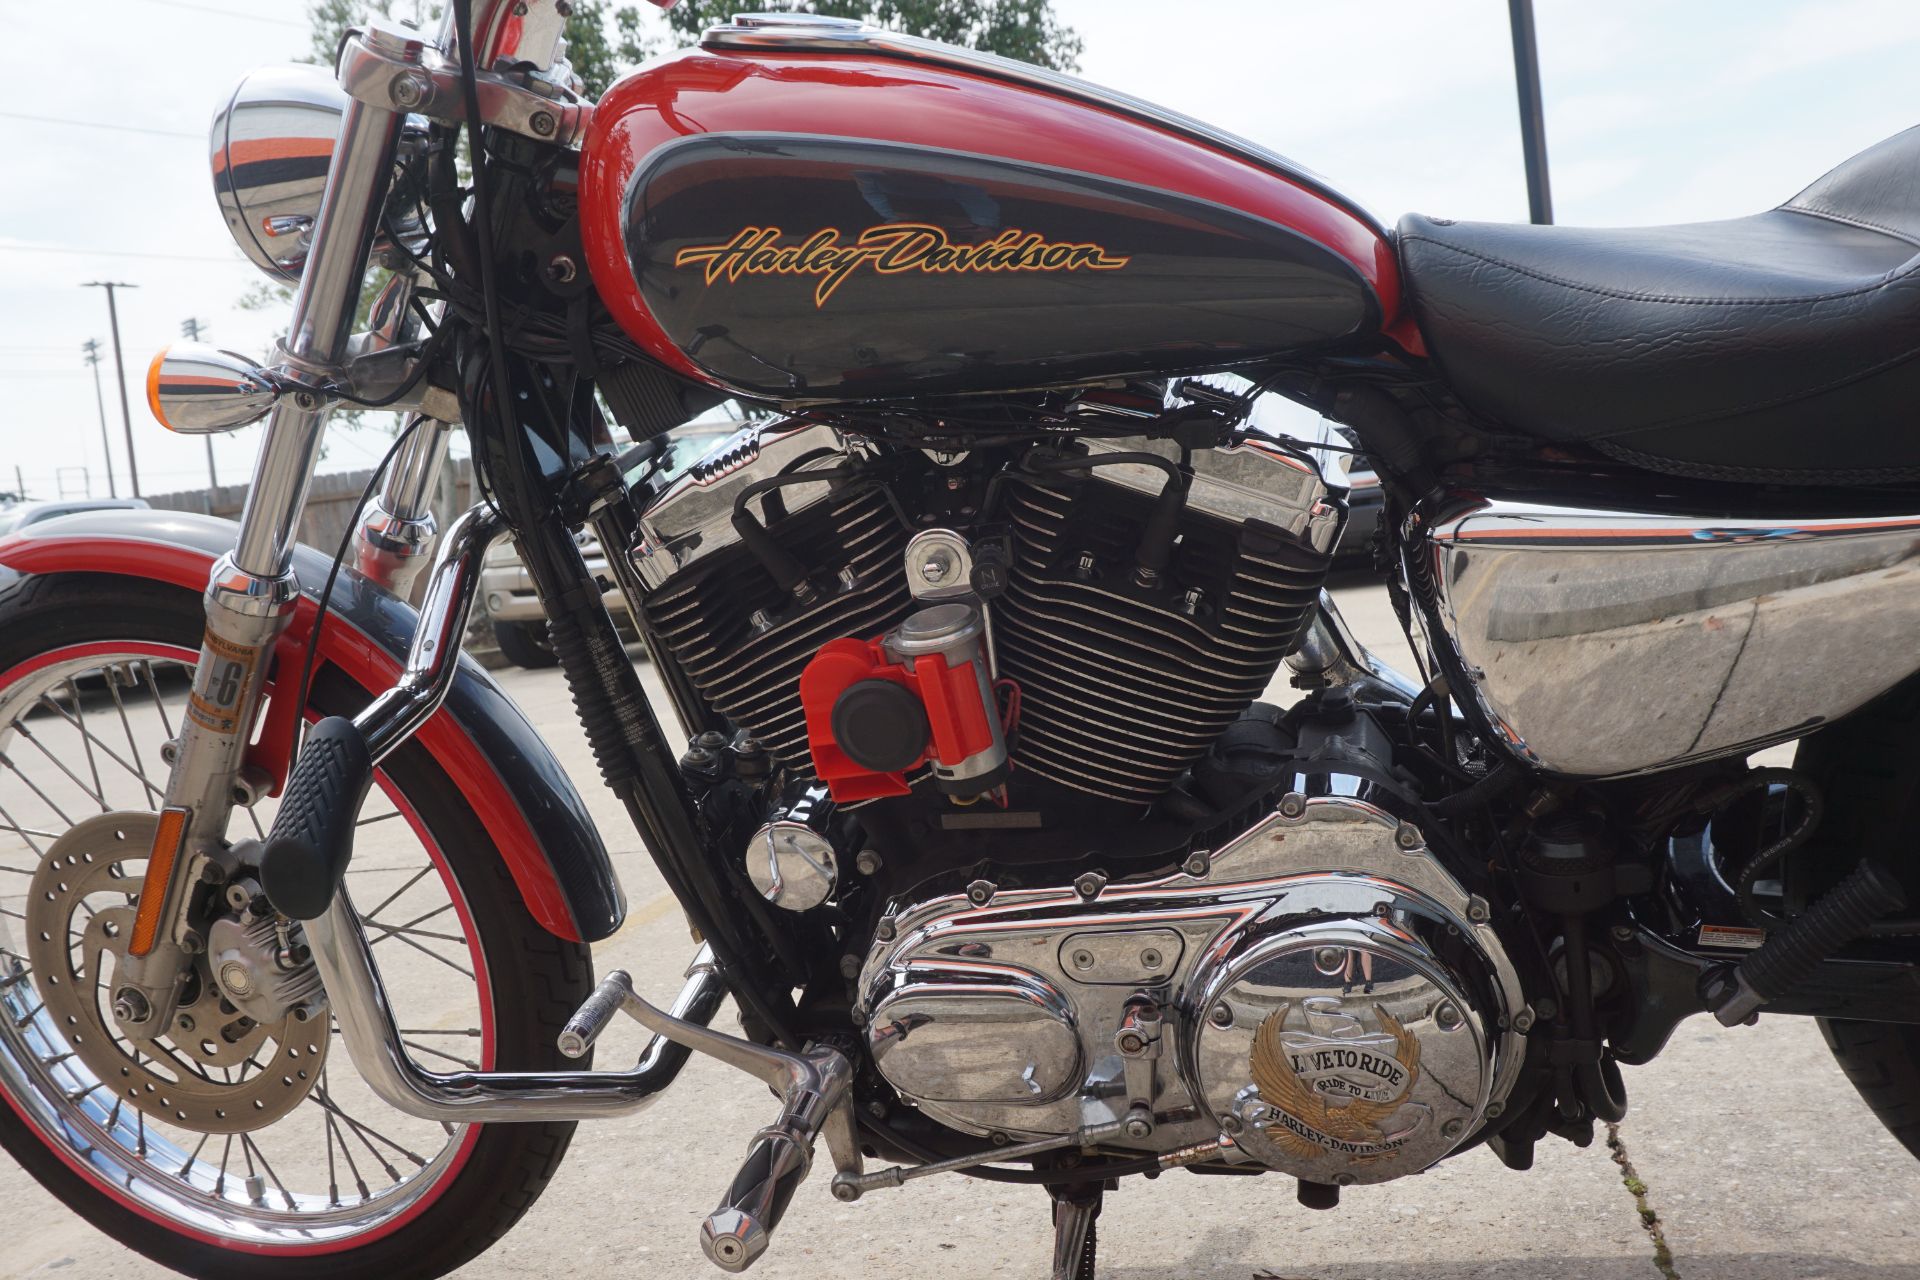 2004 Harley-Davidson Sportster® XL 1200 Custom in Metairie, Louisiana - Photo 17